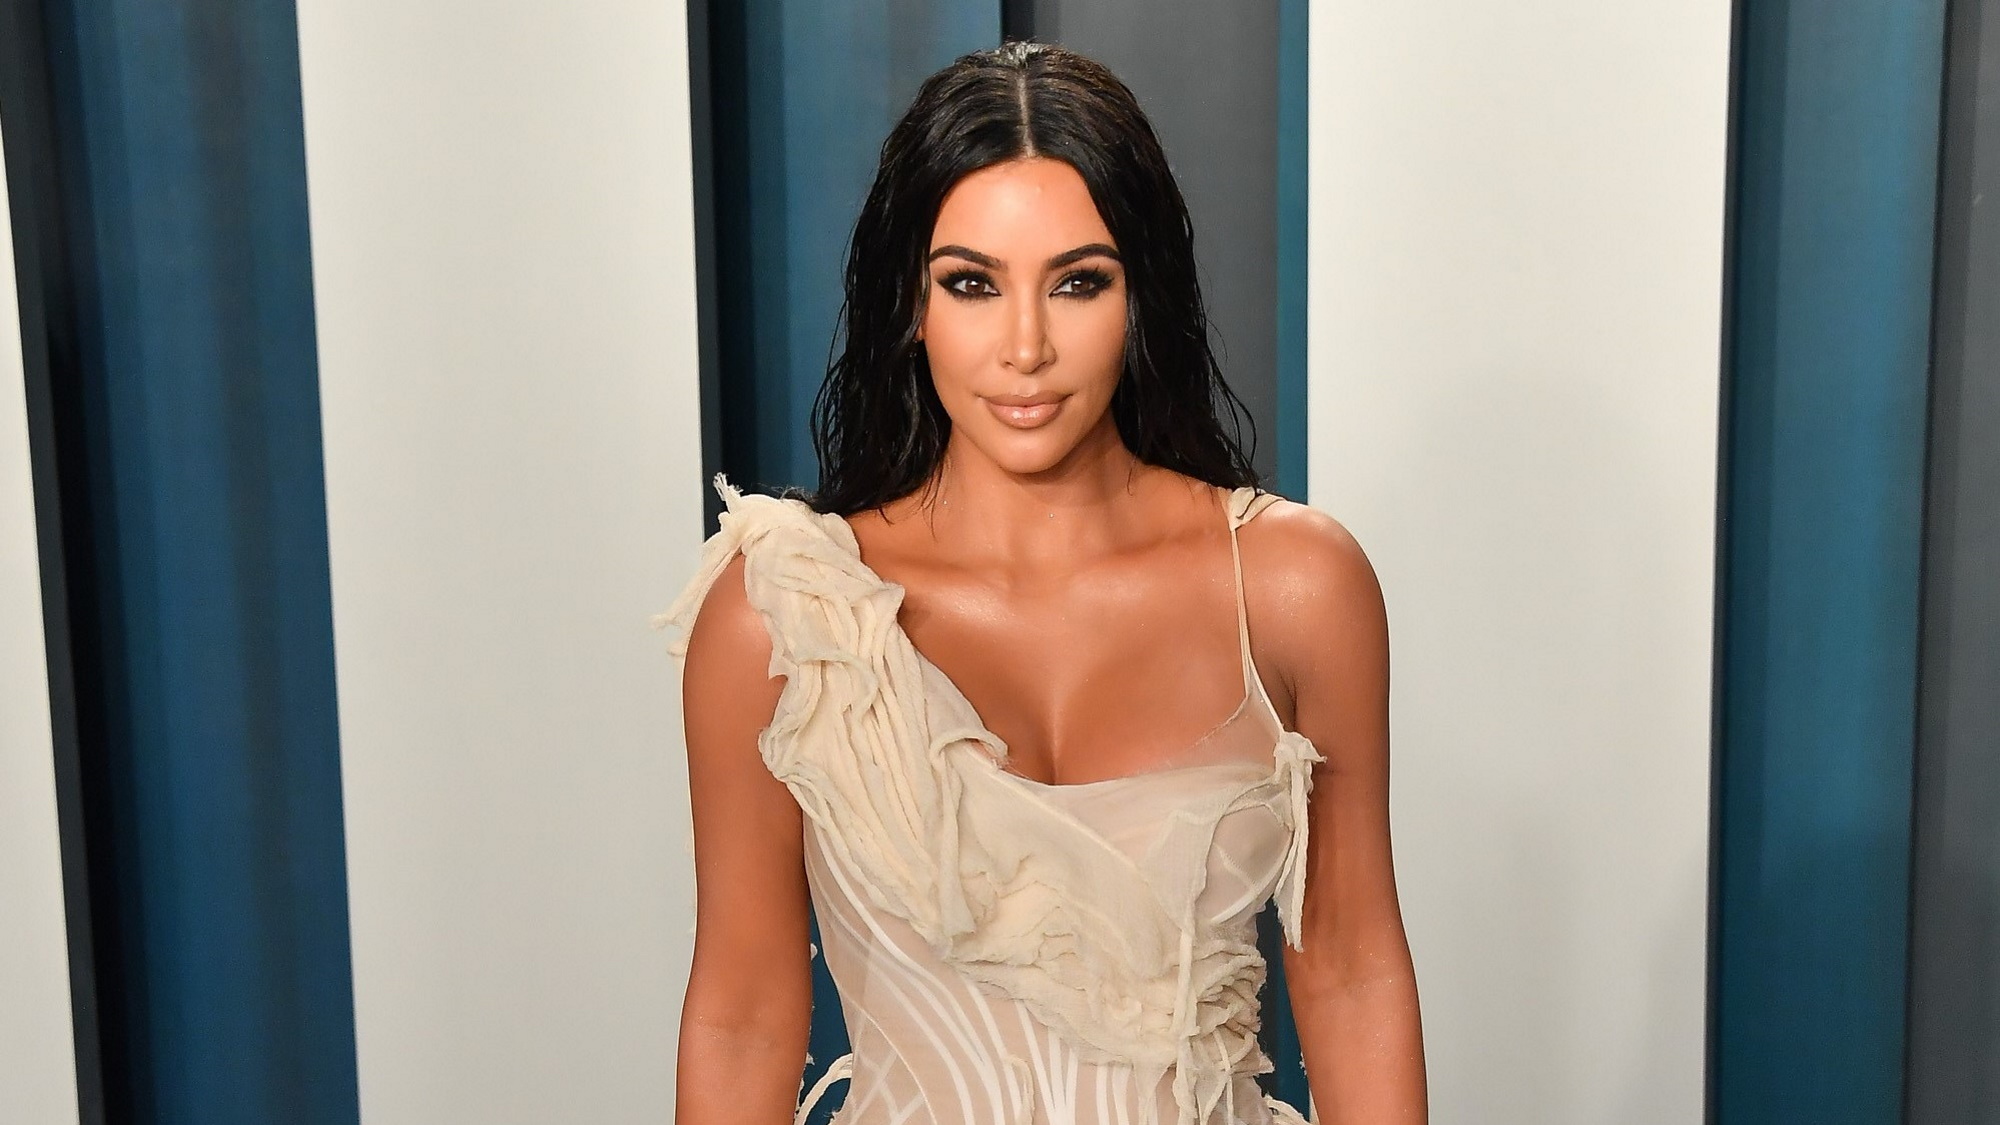 Kim Kardashian West arrives at the 2020 Vanity Fair Oscar Party